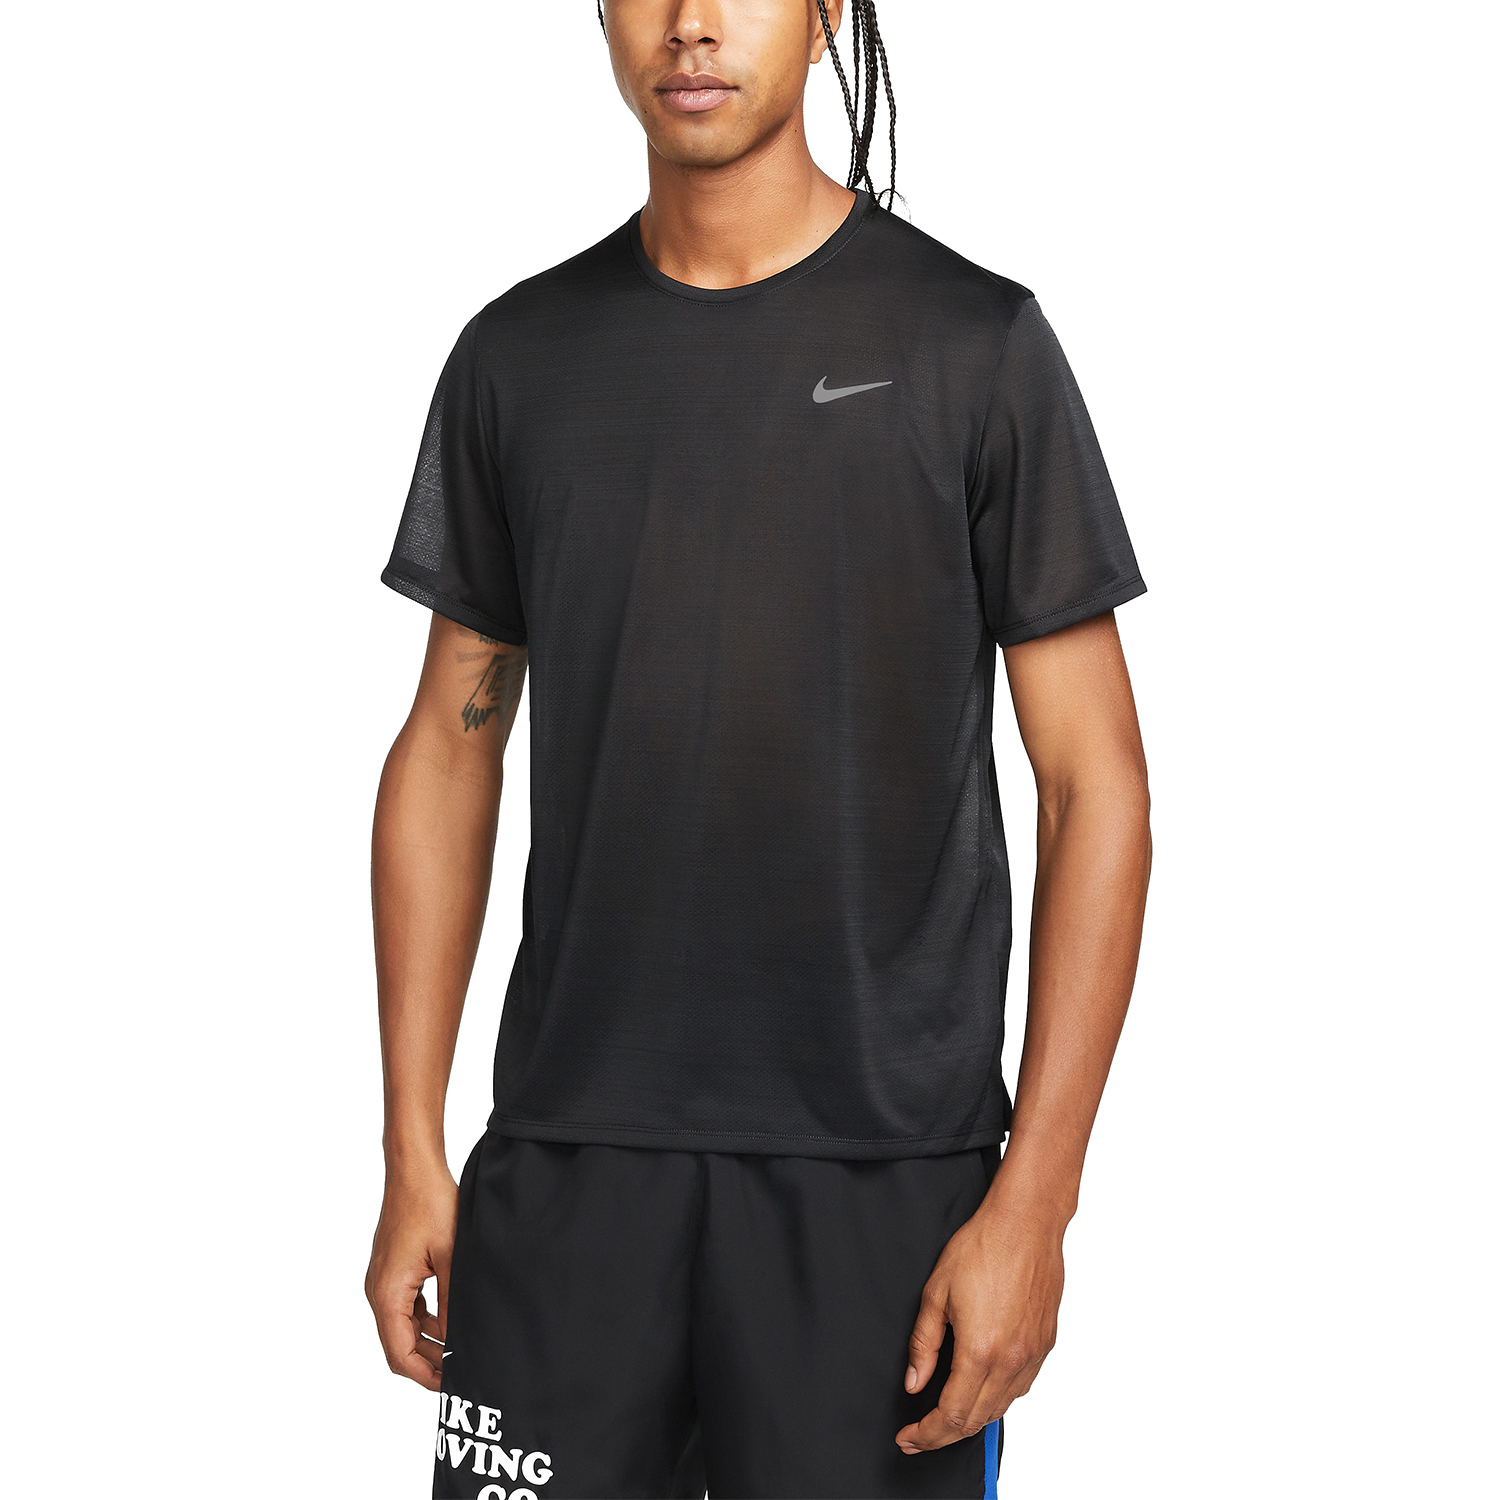 Molester bout naam Nike Dri-FIT Miler Breathe Men's Running T-Shirt - Black